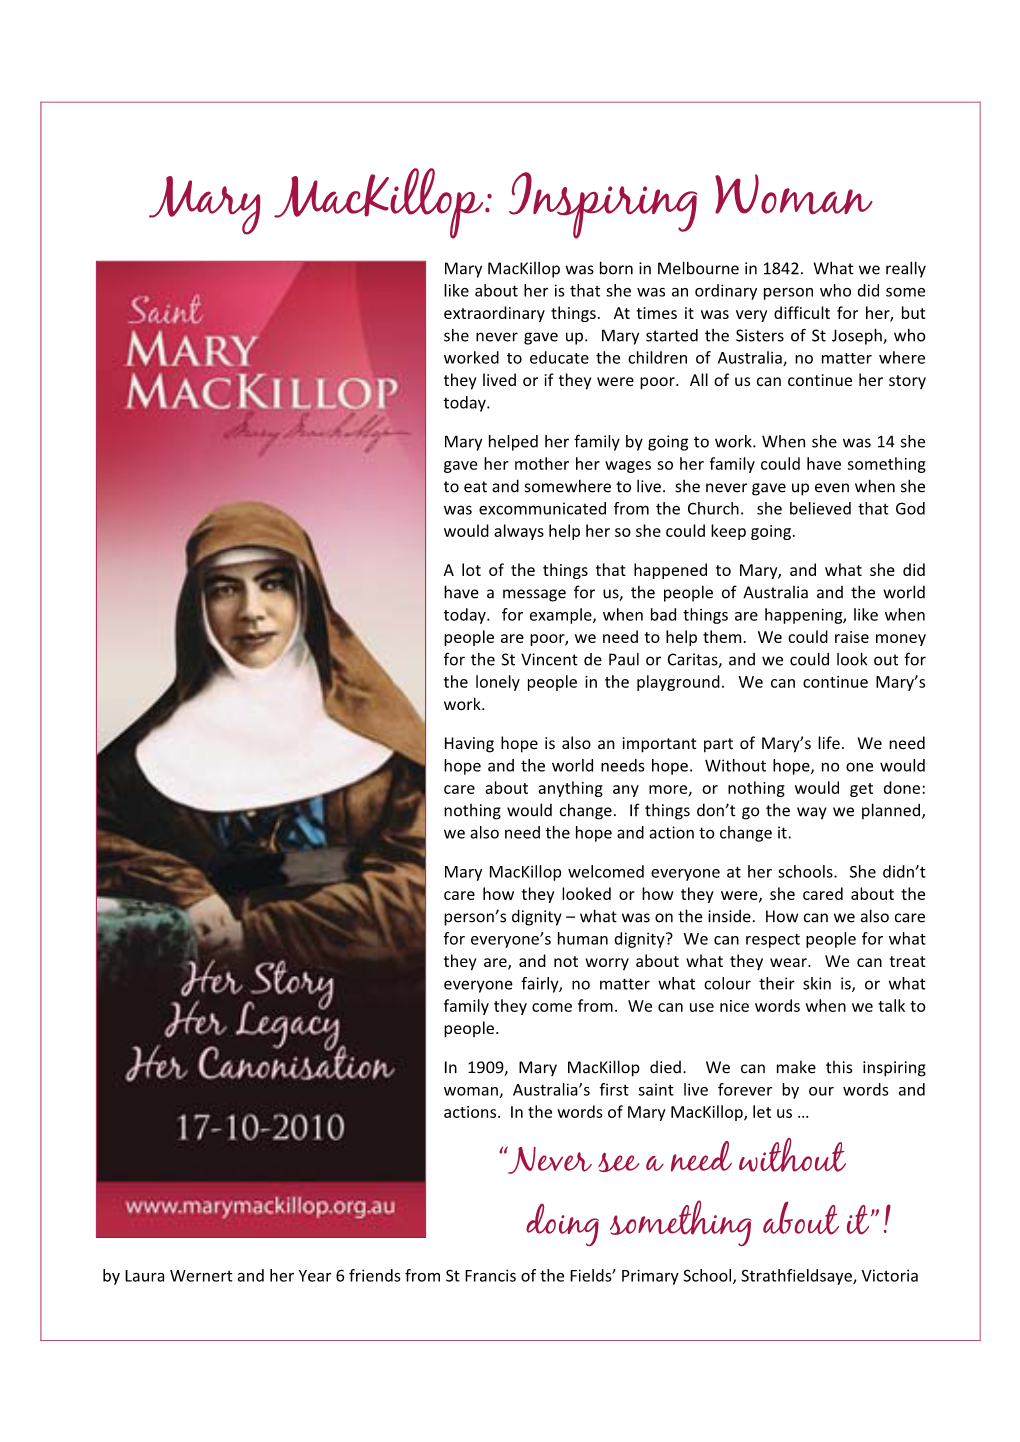 Mary Mackillop: Inspiring Woman